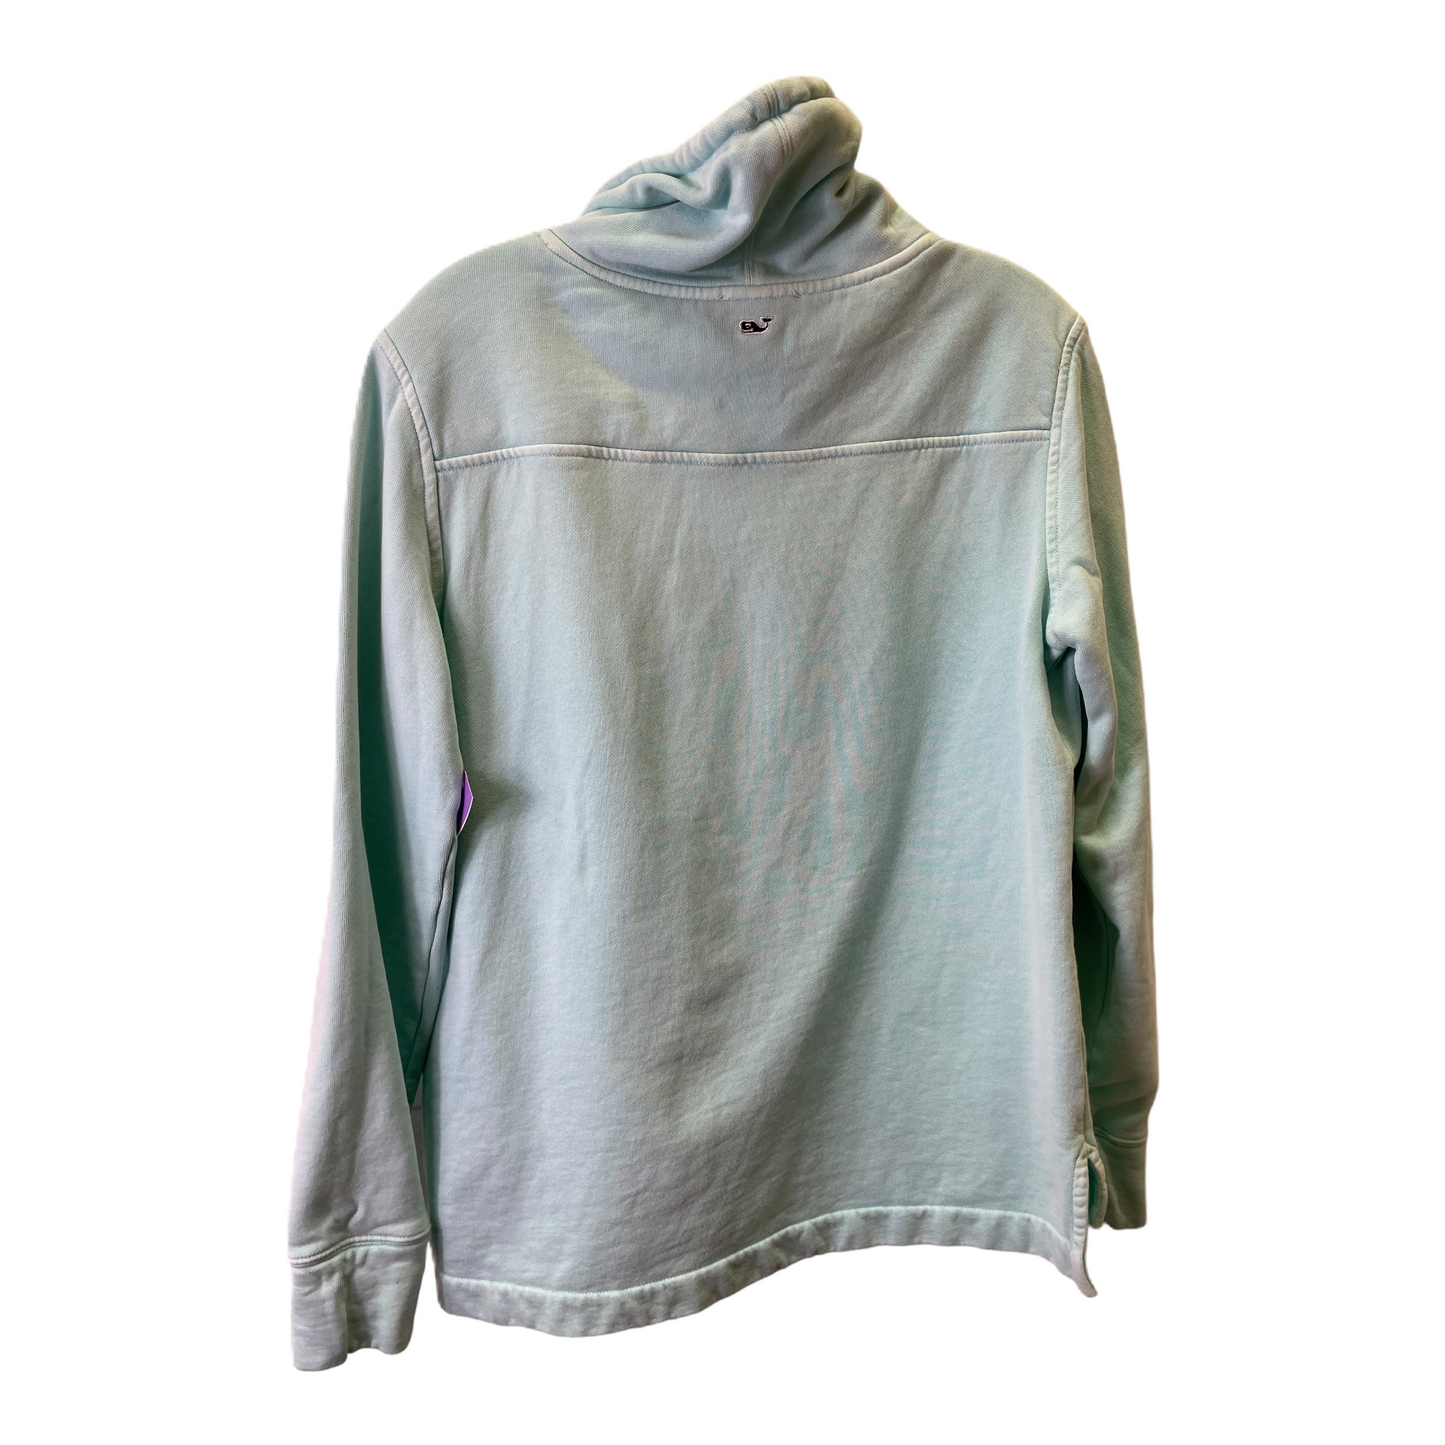 Aqua Athletic Sweatshirt Collar By Vineyard Vines, Size: S